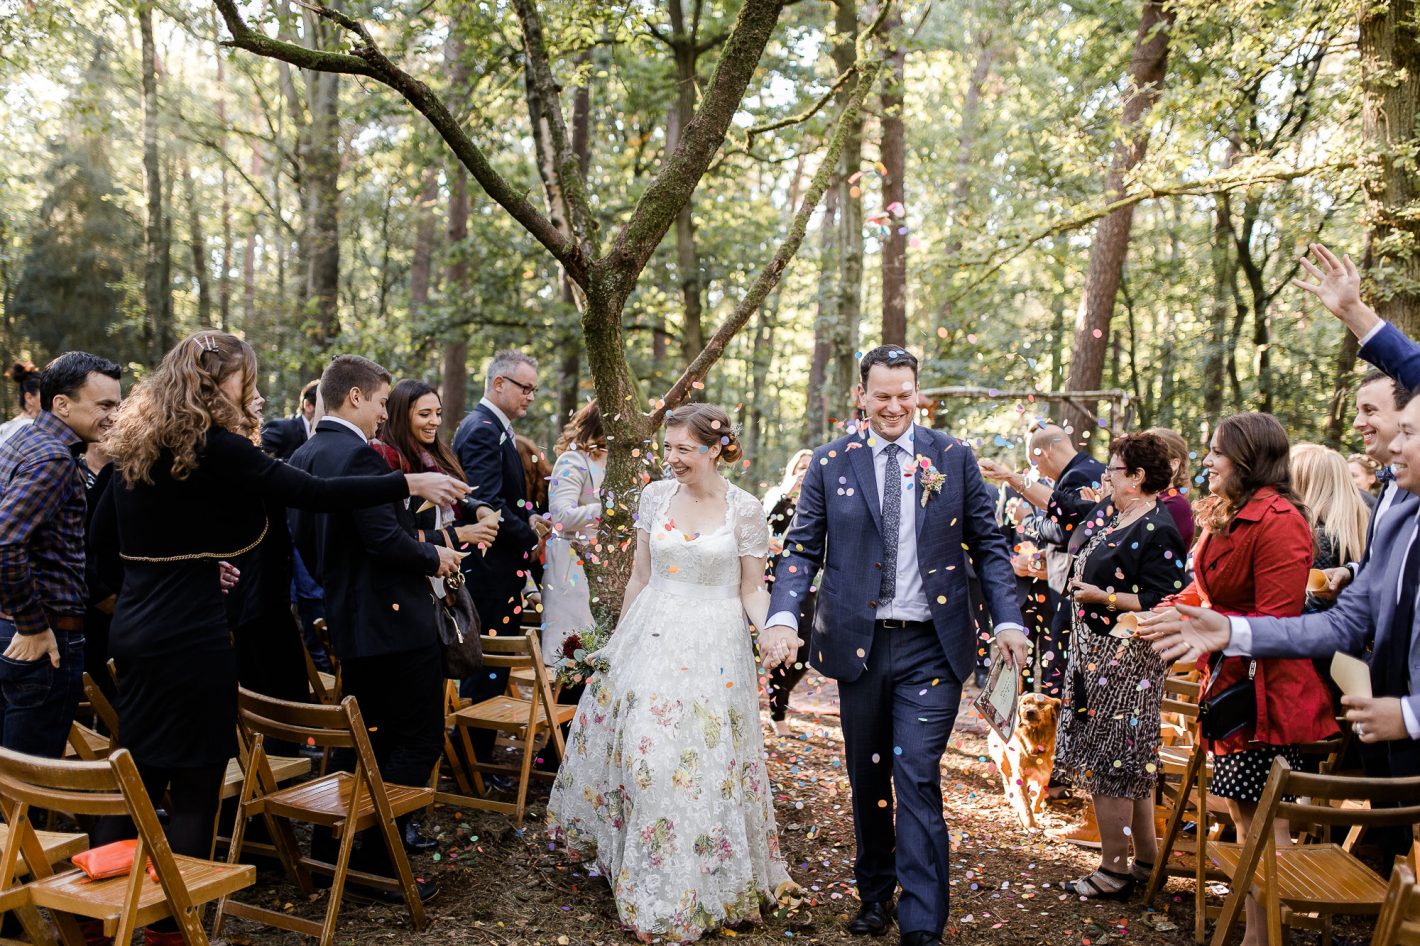 Fall wedding in the woods of Meneer van Eijck